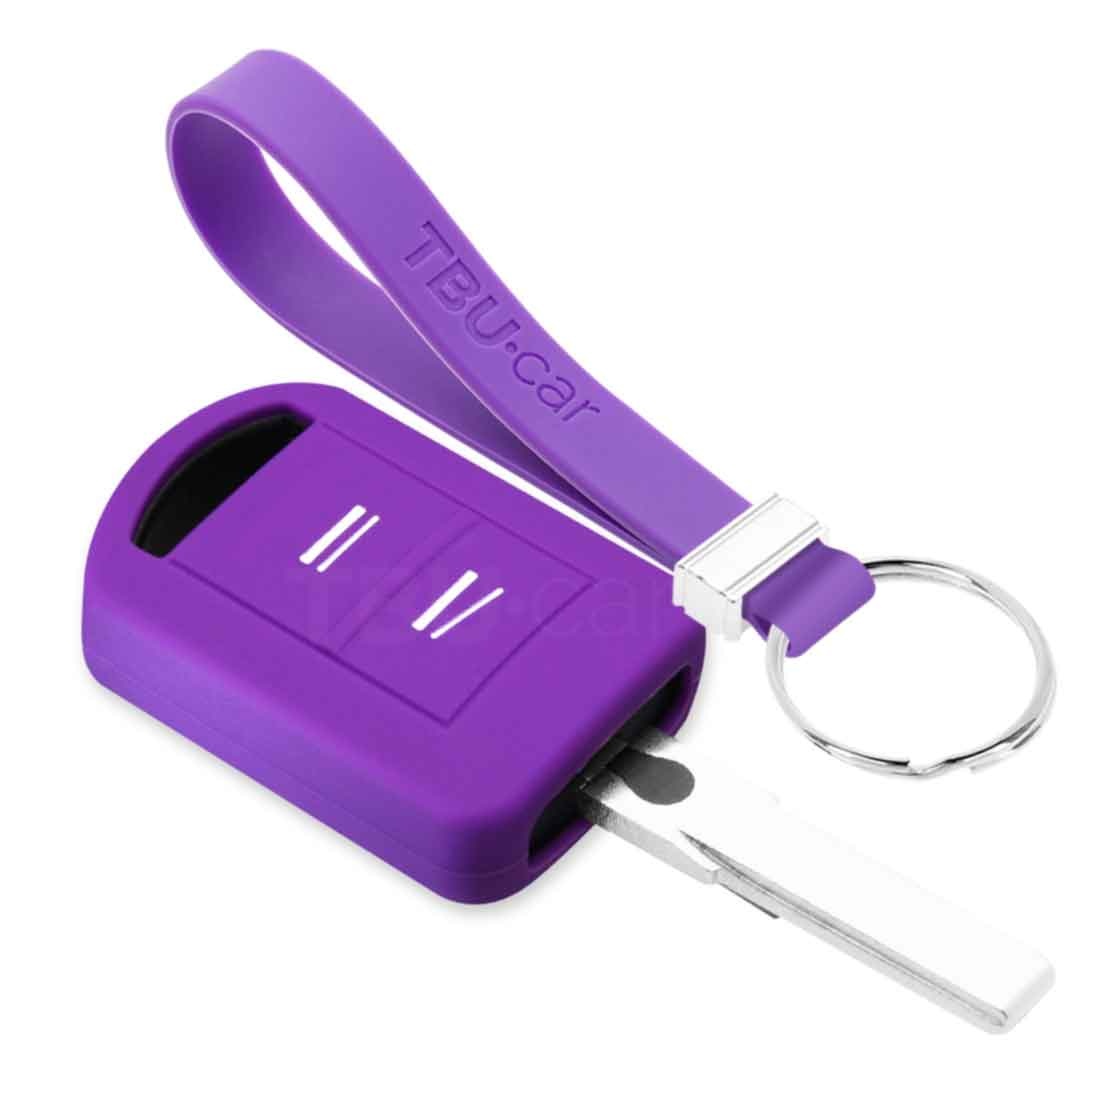 TBU car TBU car Autoschlüssel Hülle kompatibel mit Vauxhall 2 Tasten - Schutzhülle aus Silikon - Auto Schlüsselhülle Cover in Violett